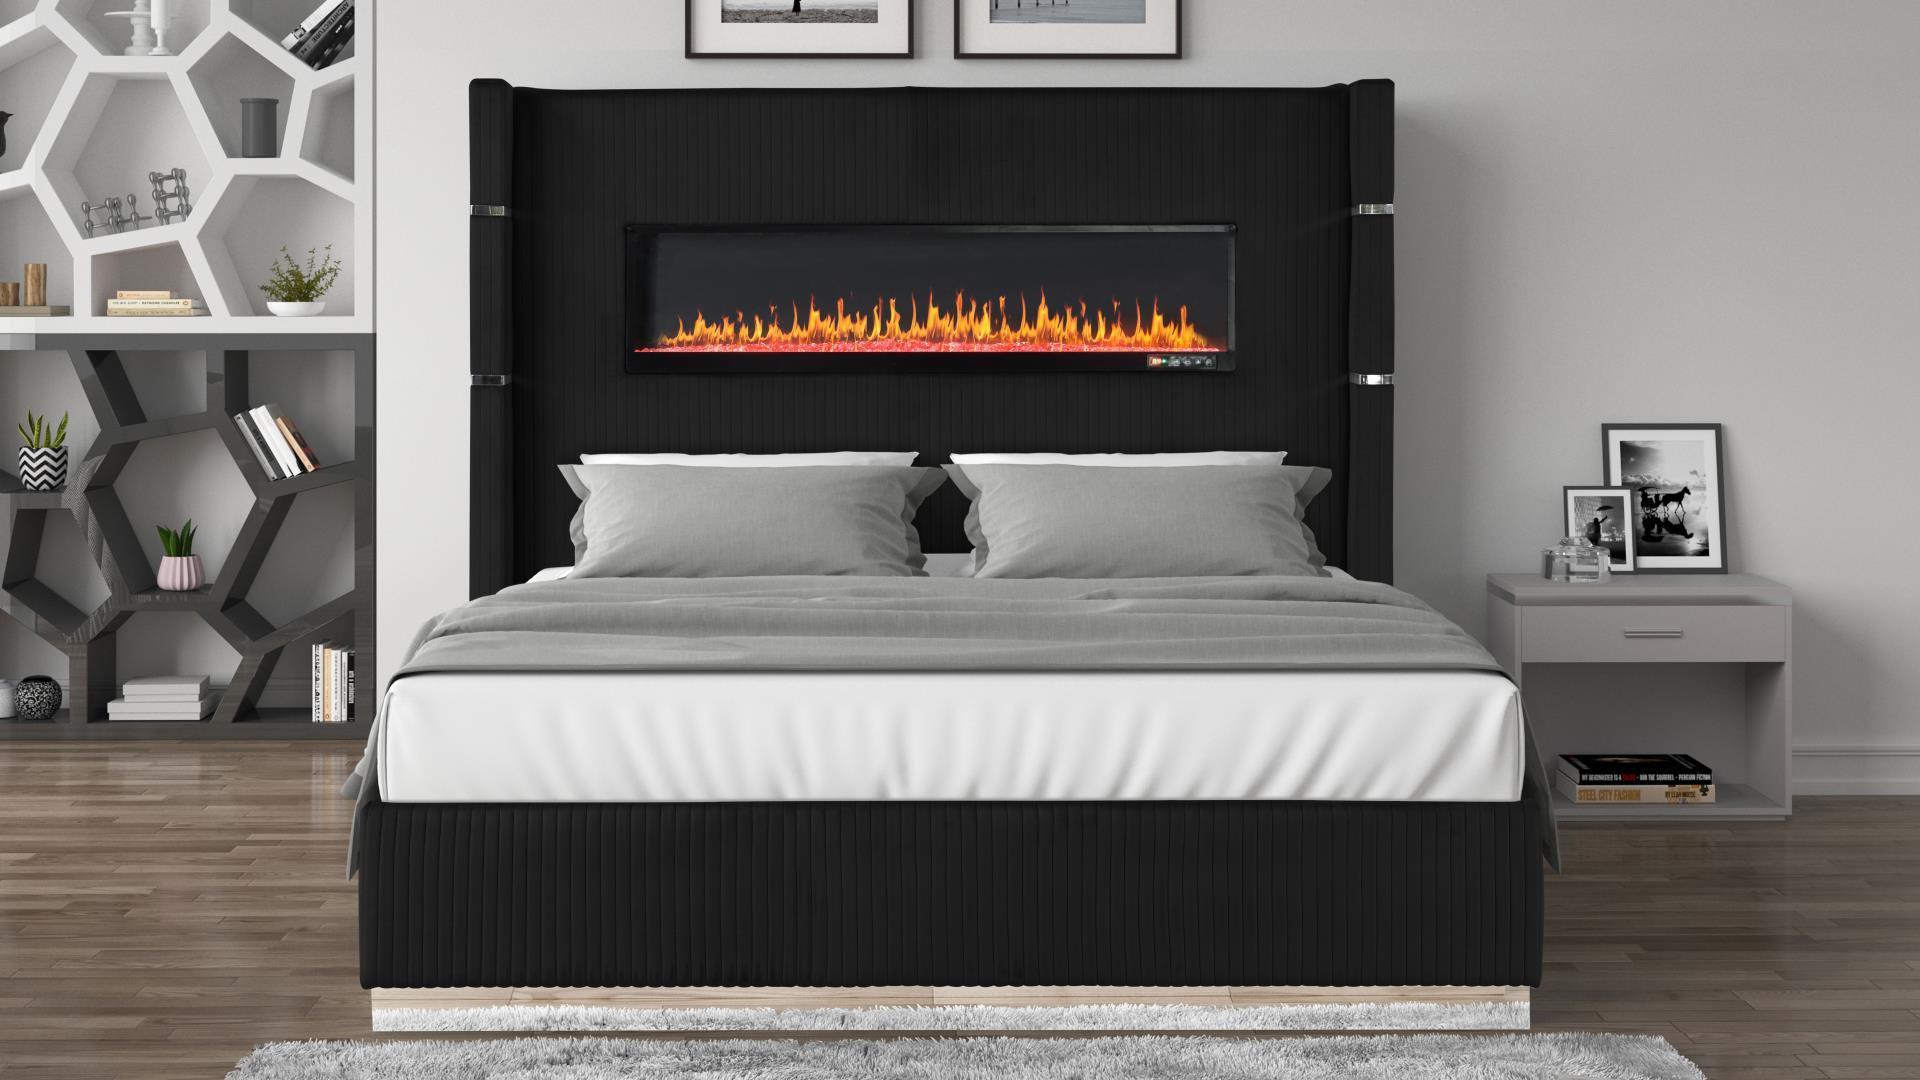 

    
Black Queen Bedroom Set 4Pcs LIZELLE Galaxy Home Contemporary Luxury
